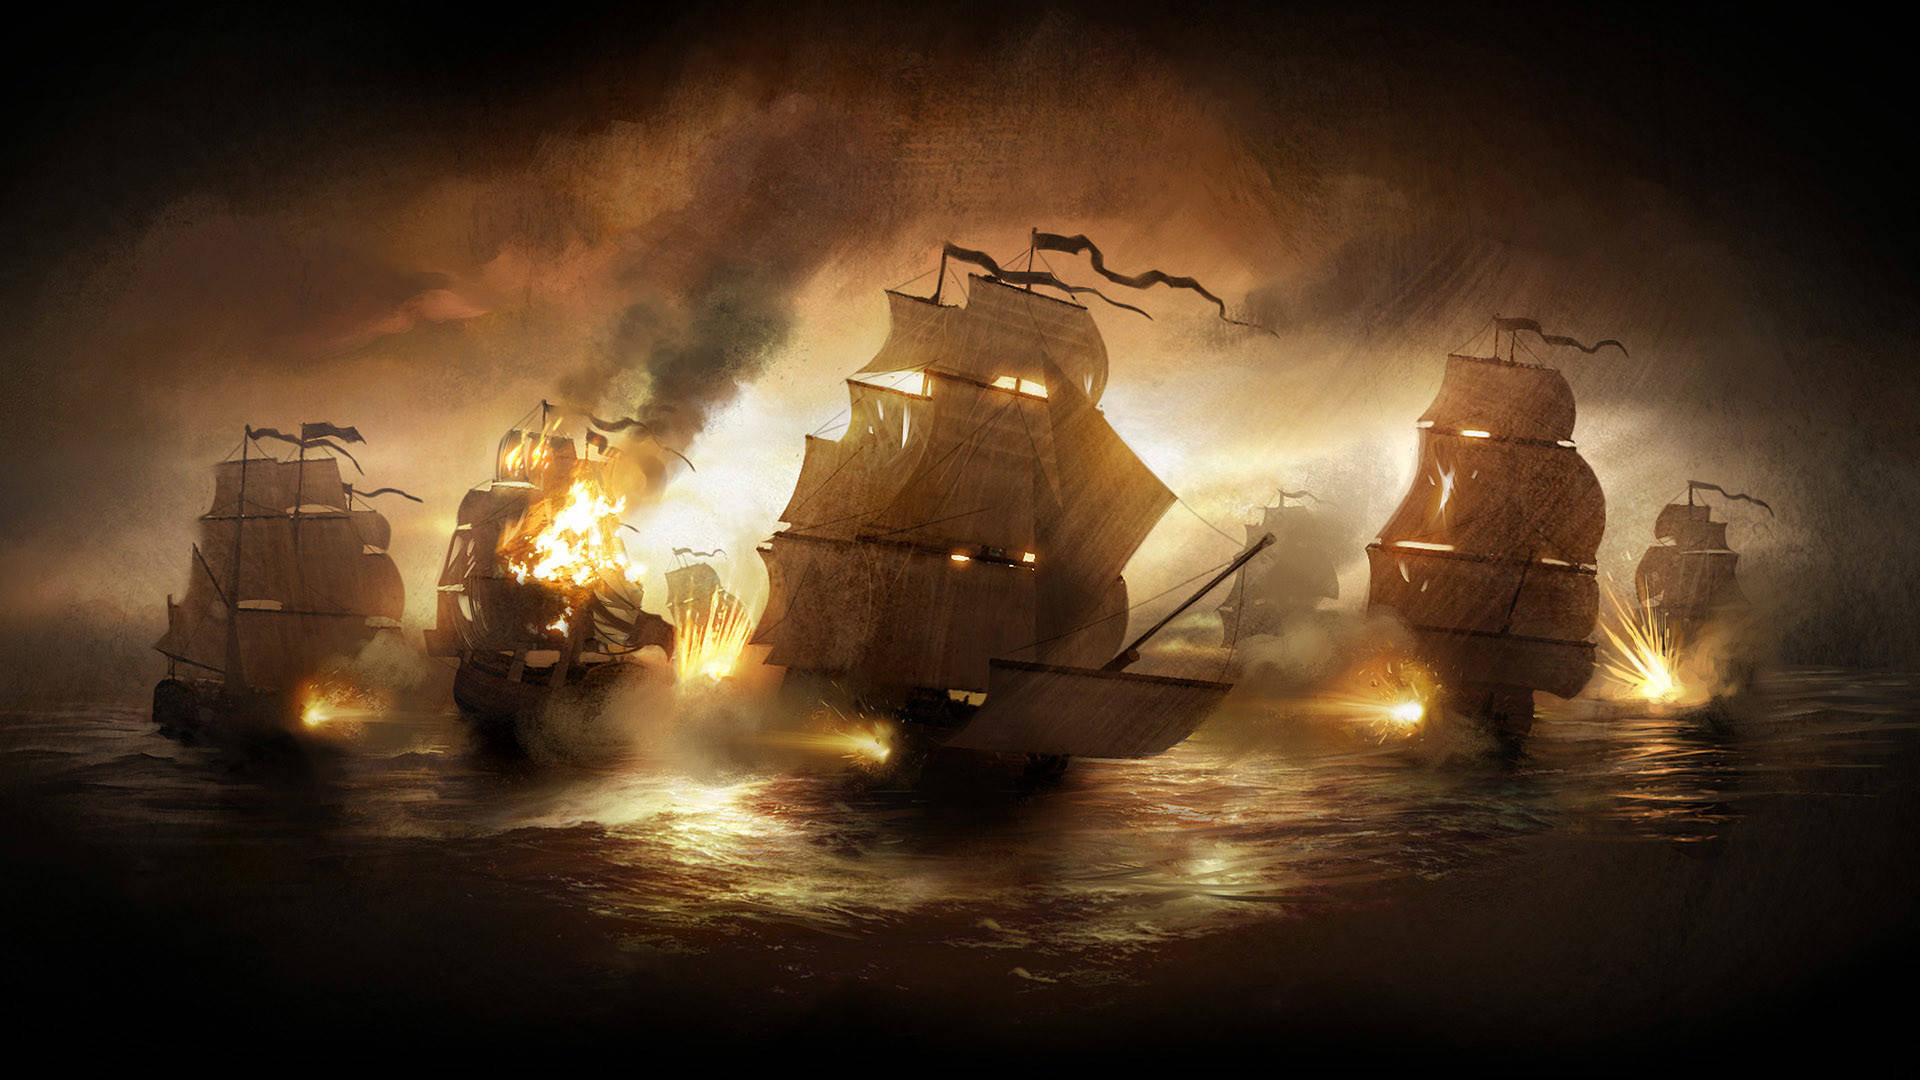 Pirate Ship On Fire Best Desktop Background